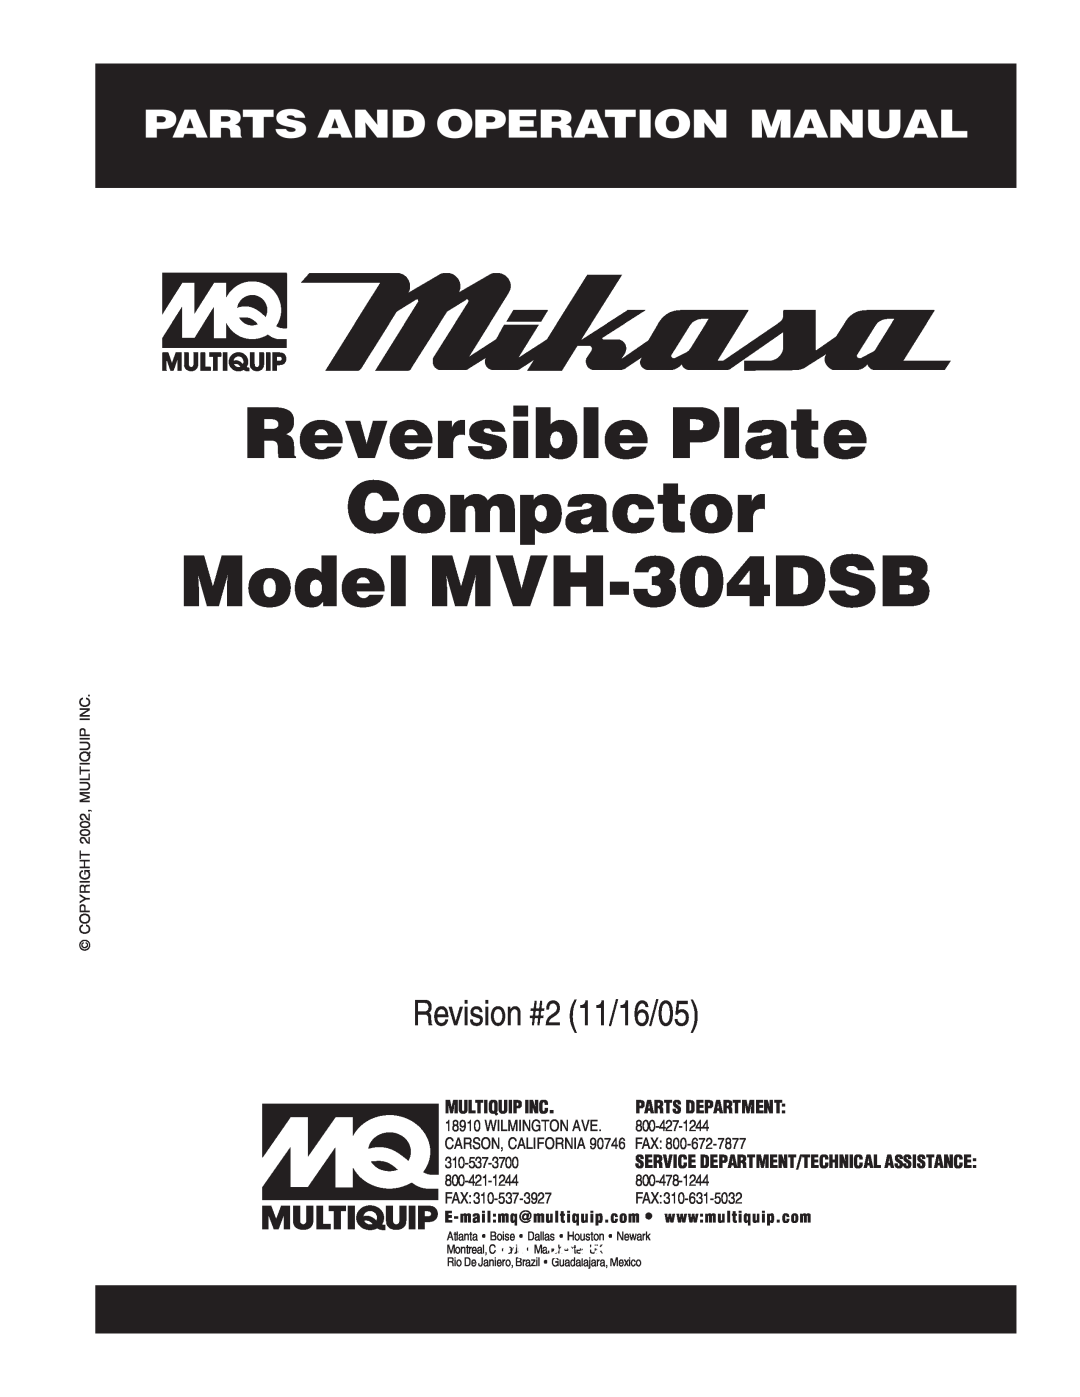 Multiquip operation manual Reversible Plate Compactor Model MVH-304DSB, Revision #2 11/16/05, Multiquip Inc 